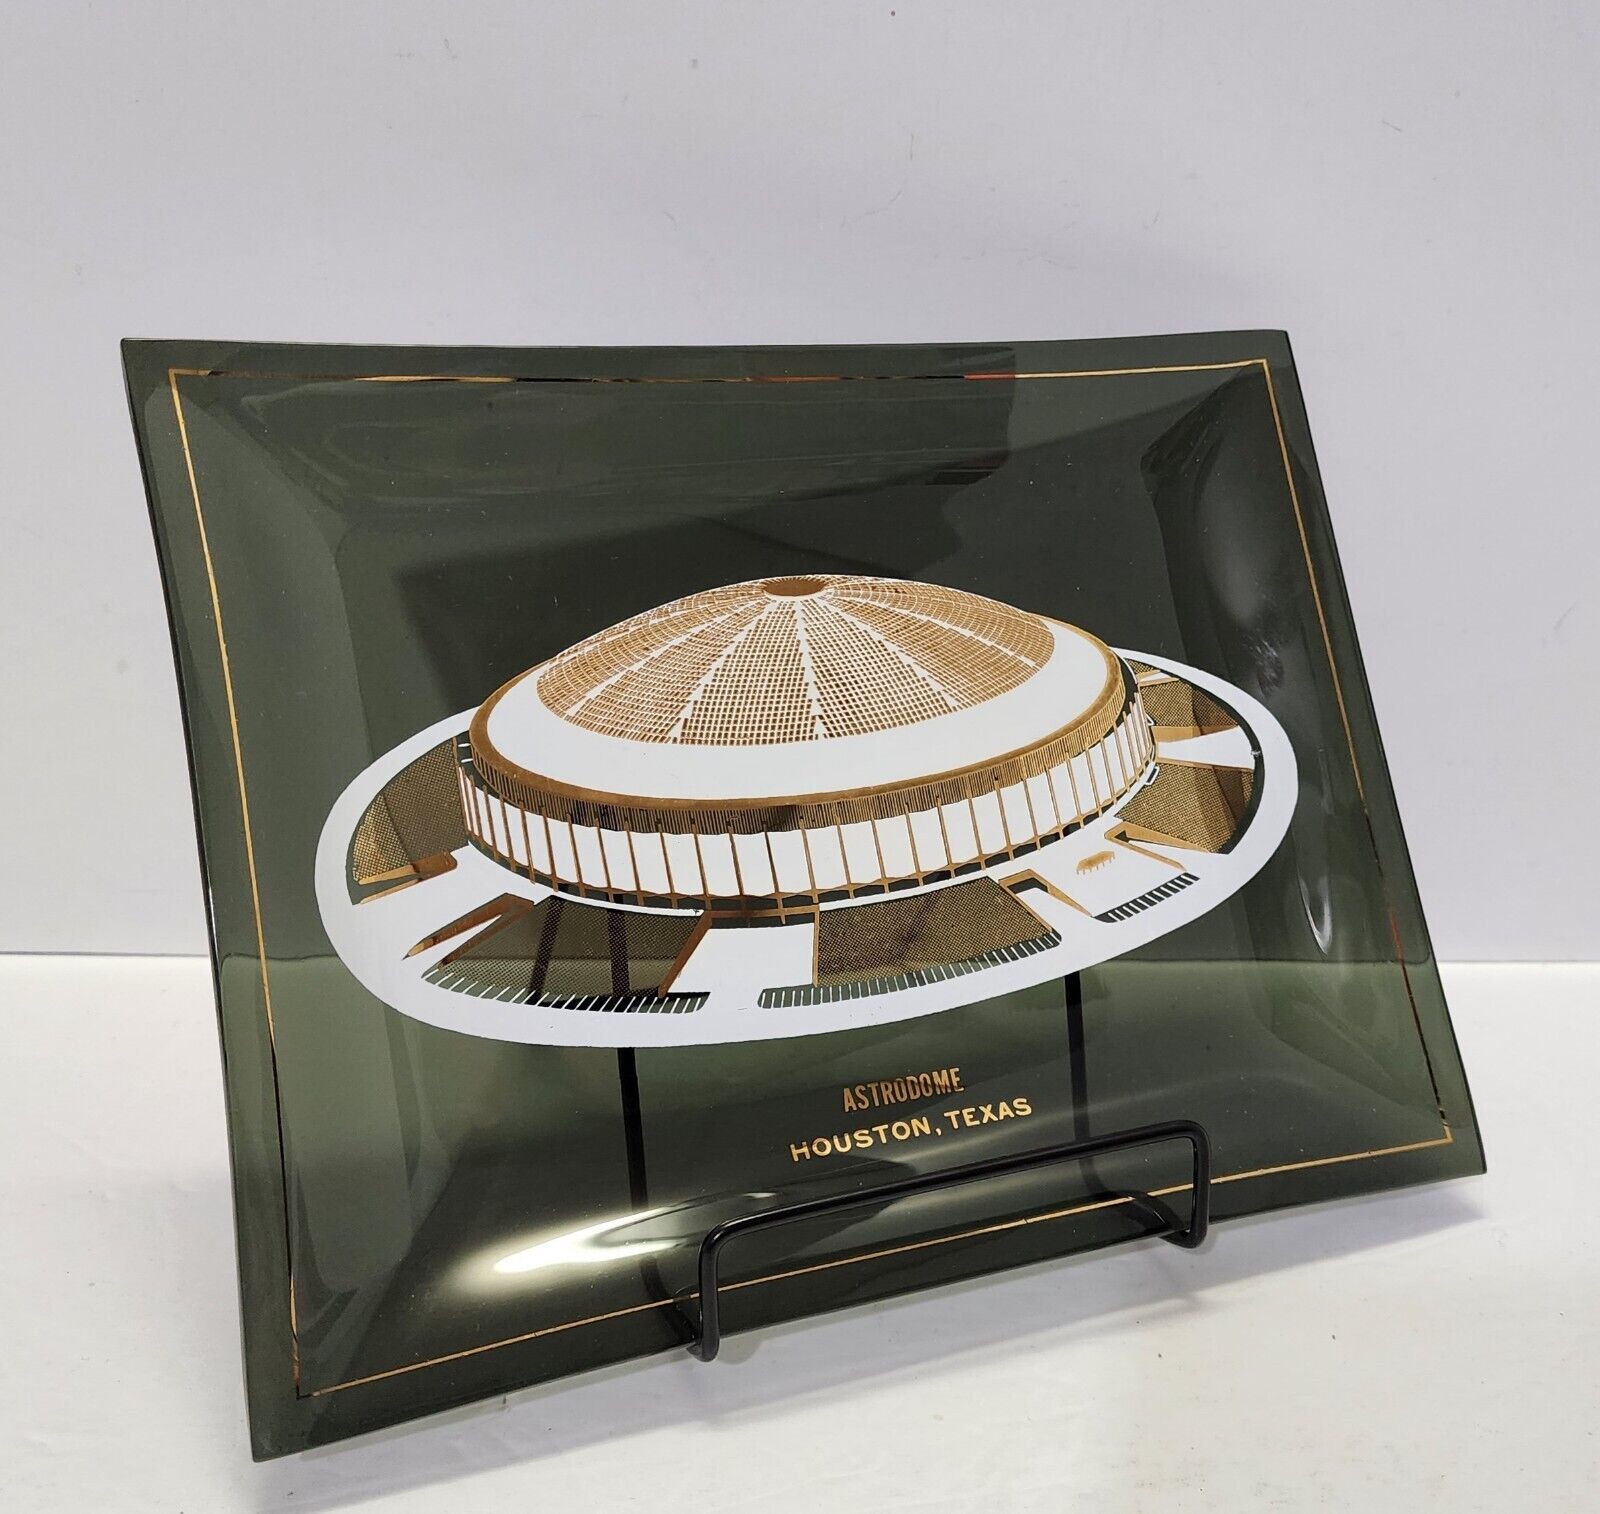 Vintage Astrodome Houston Texas, Smoked Glass Souvenir Plate With Stand